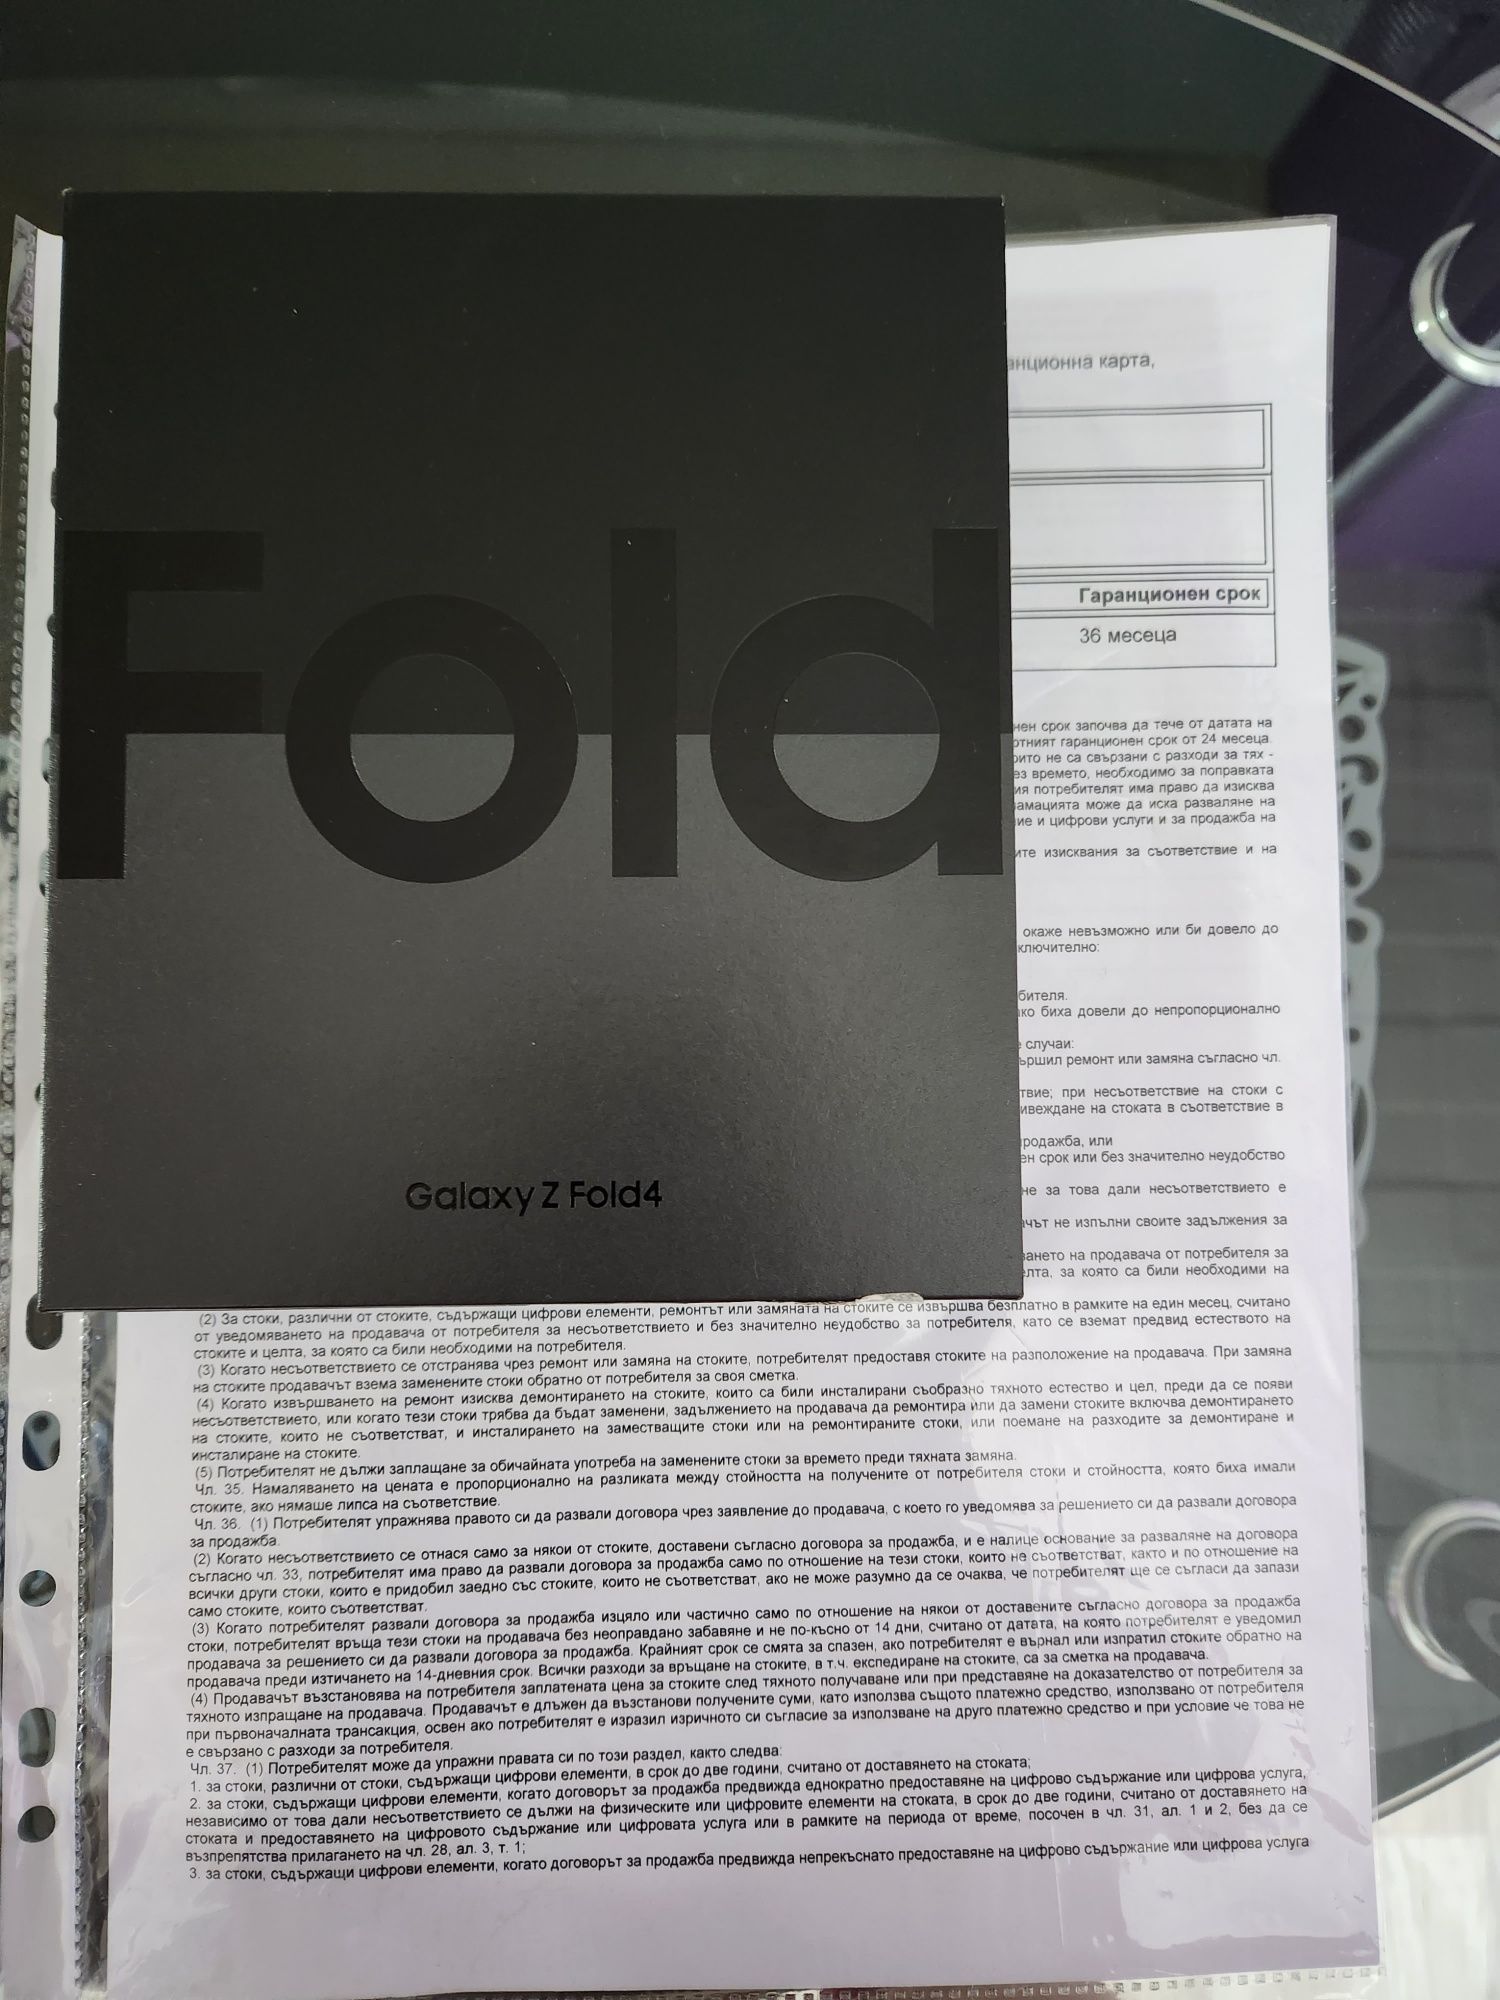 Samsung Z Fold 4 512GB